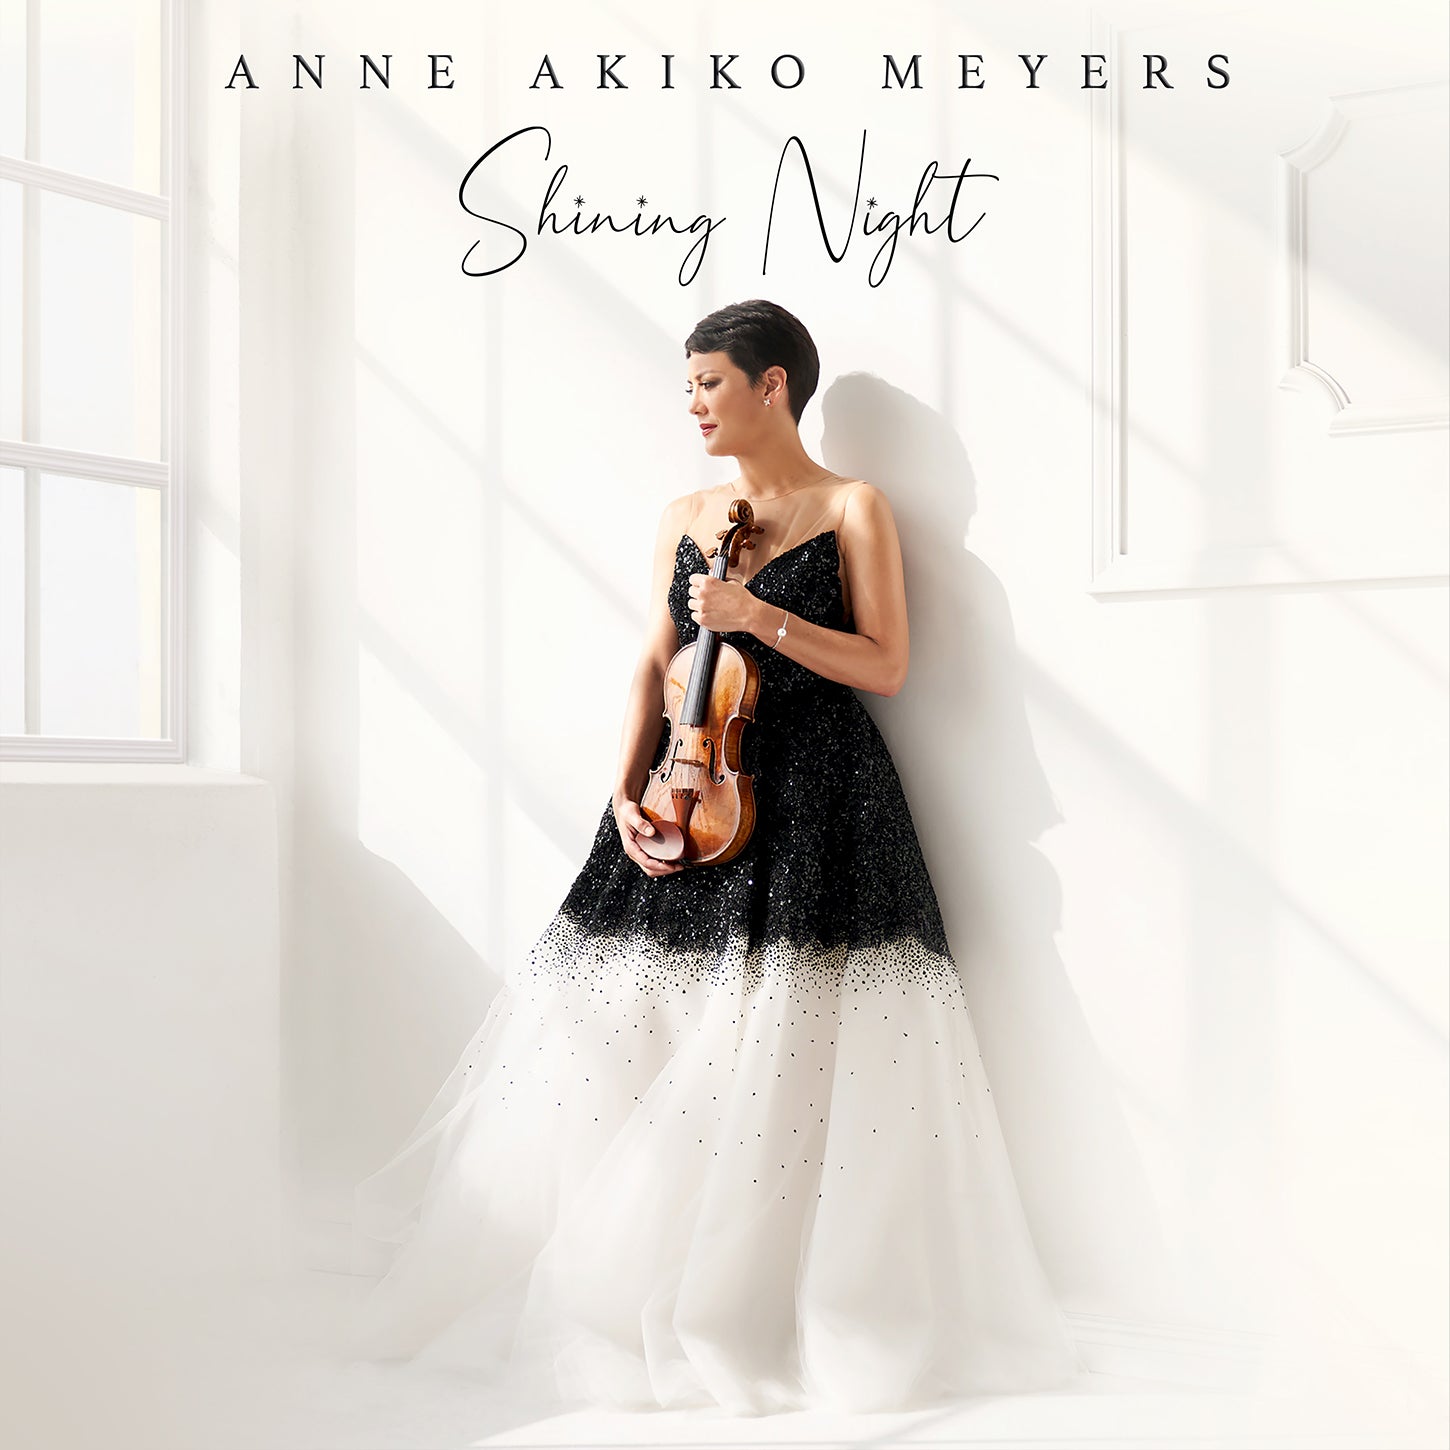 Shining Night / Anne Akiko Meyers